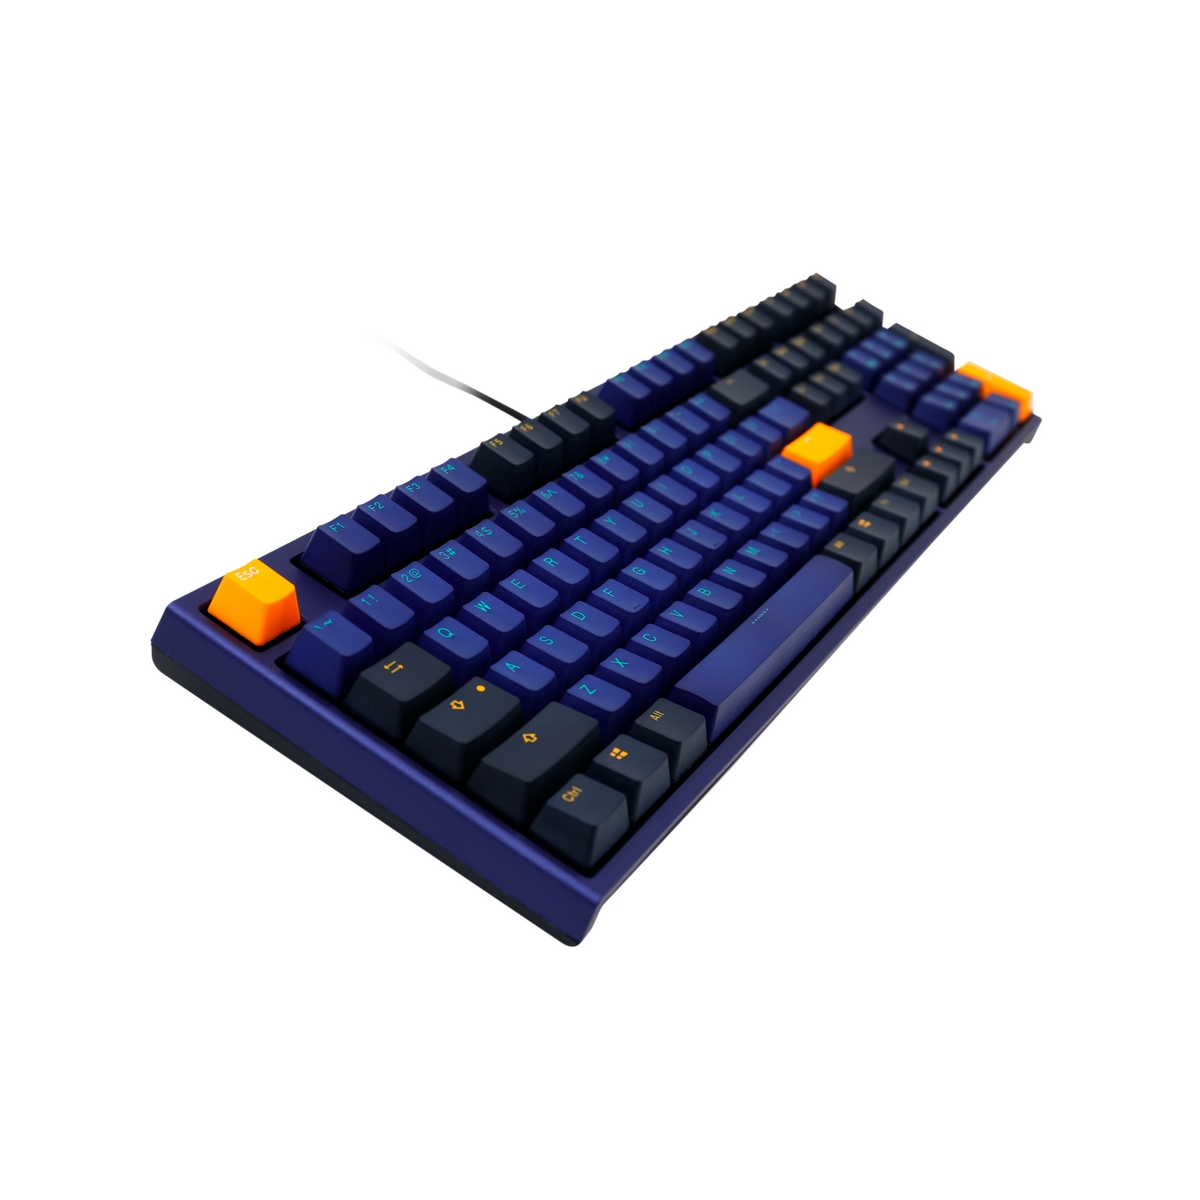 Ducky - Ducky One 2 Horizon Brown Cherry MX Switch USB Mechanical Gaming Keyboard UK Layout